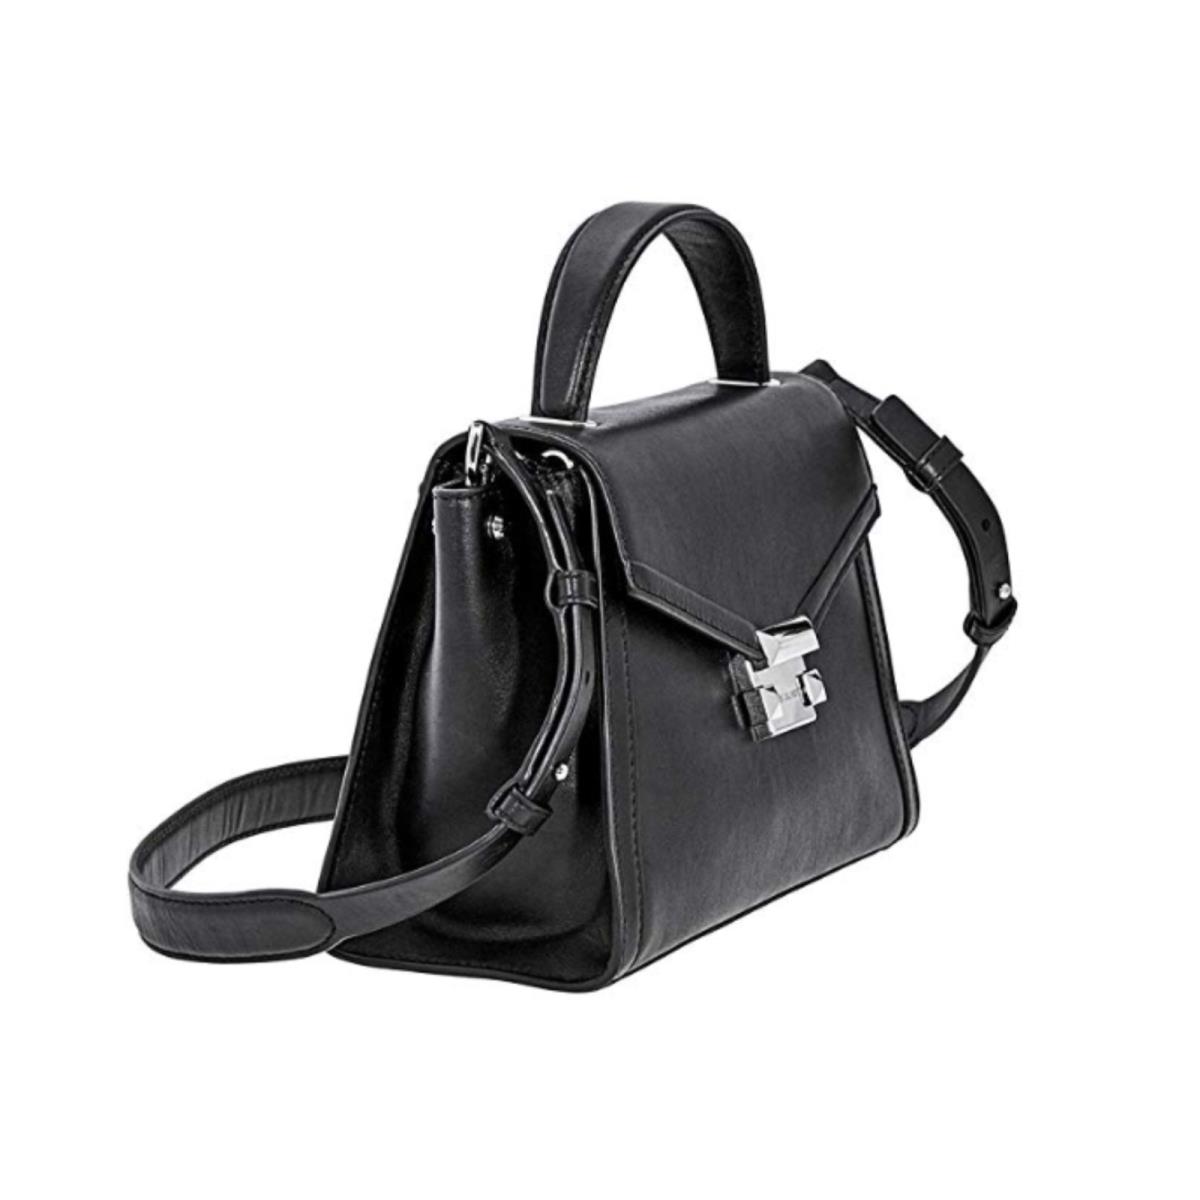 Michael Kors  bag   - Black Lining, Black / Silver Exterior